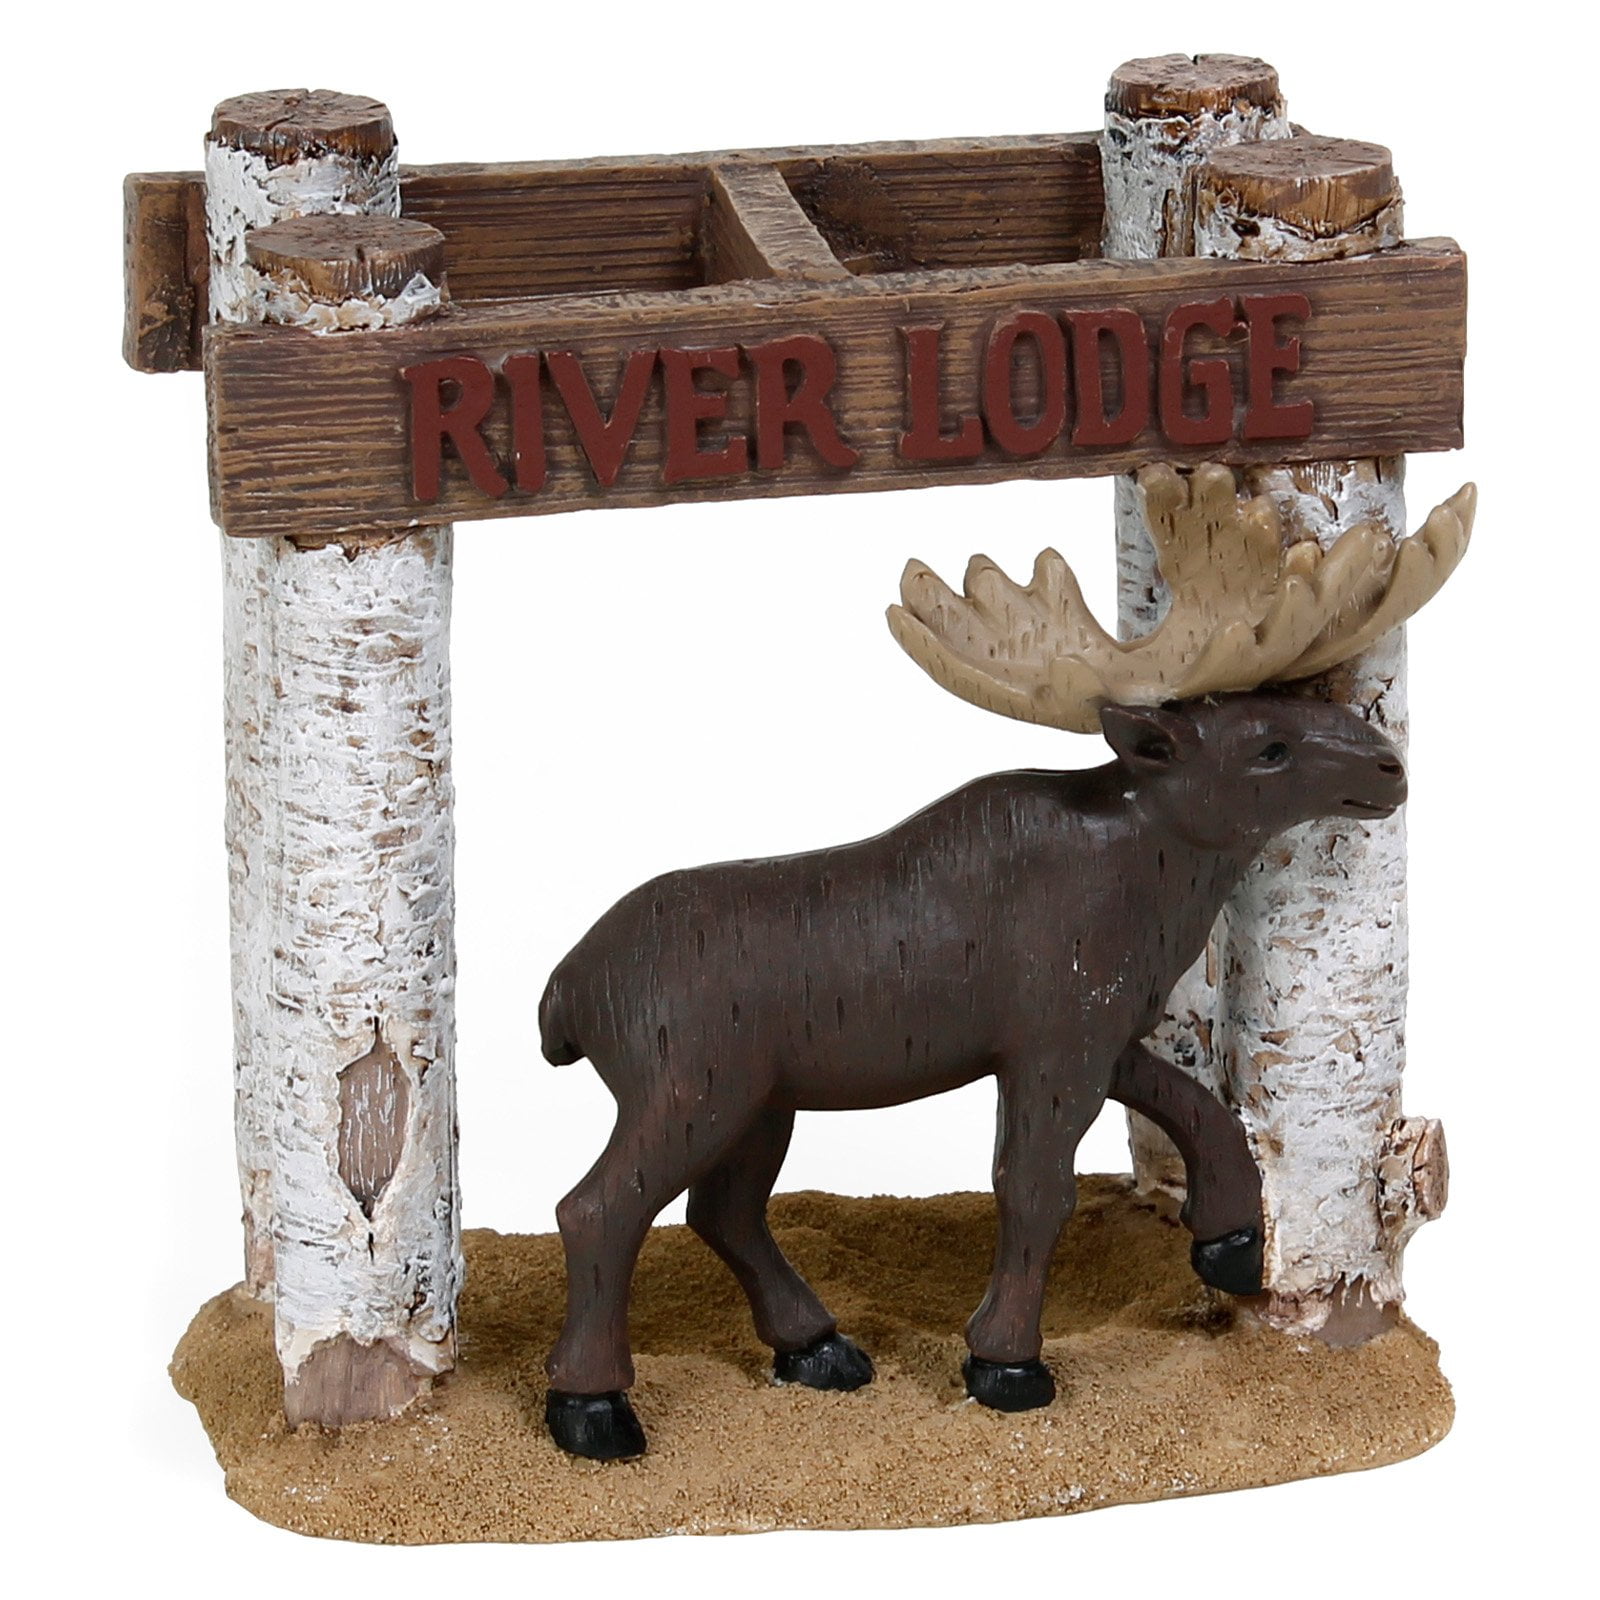 Deer Birch Tree Bathroom Toothbrush Holder Rustic Lodge Log Cabin Decor 1-Pc 